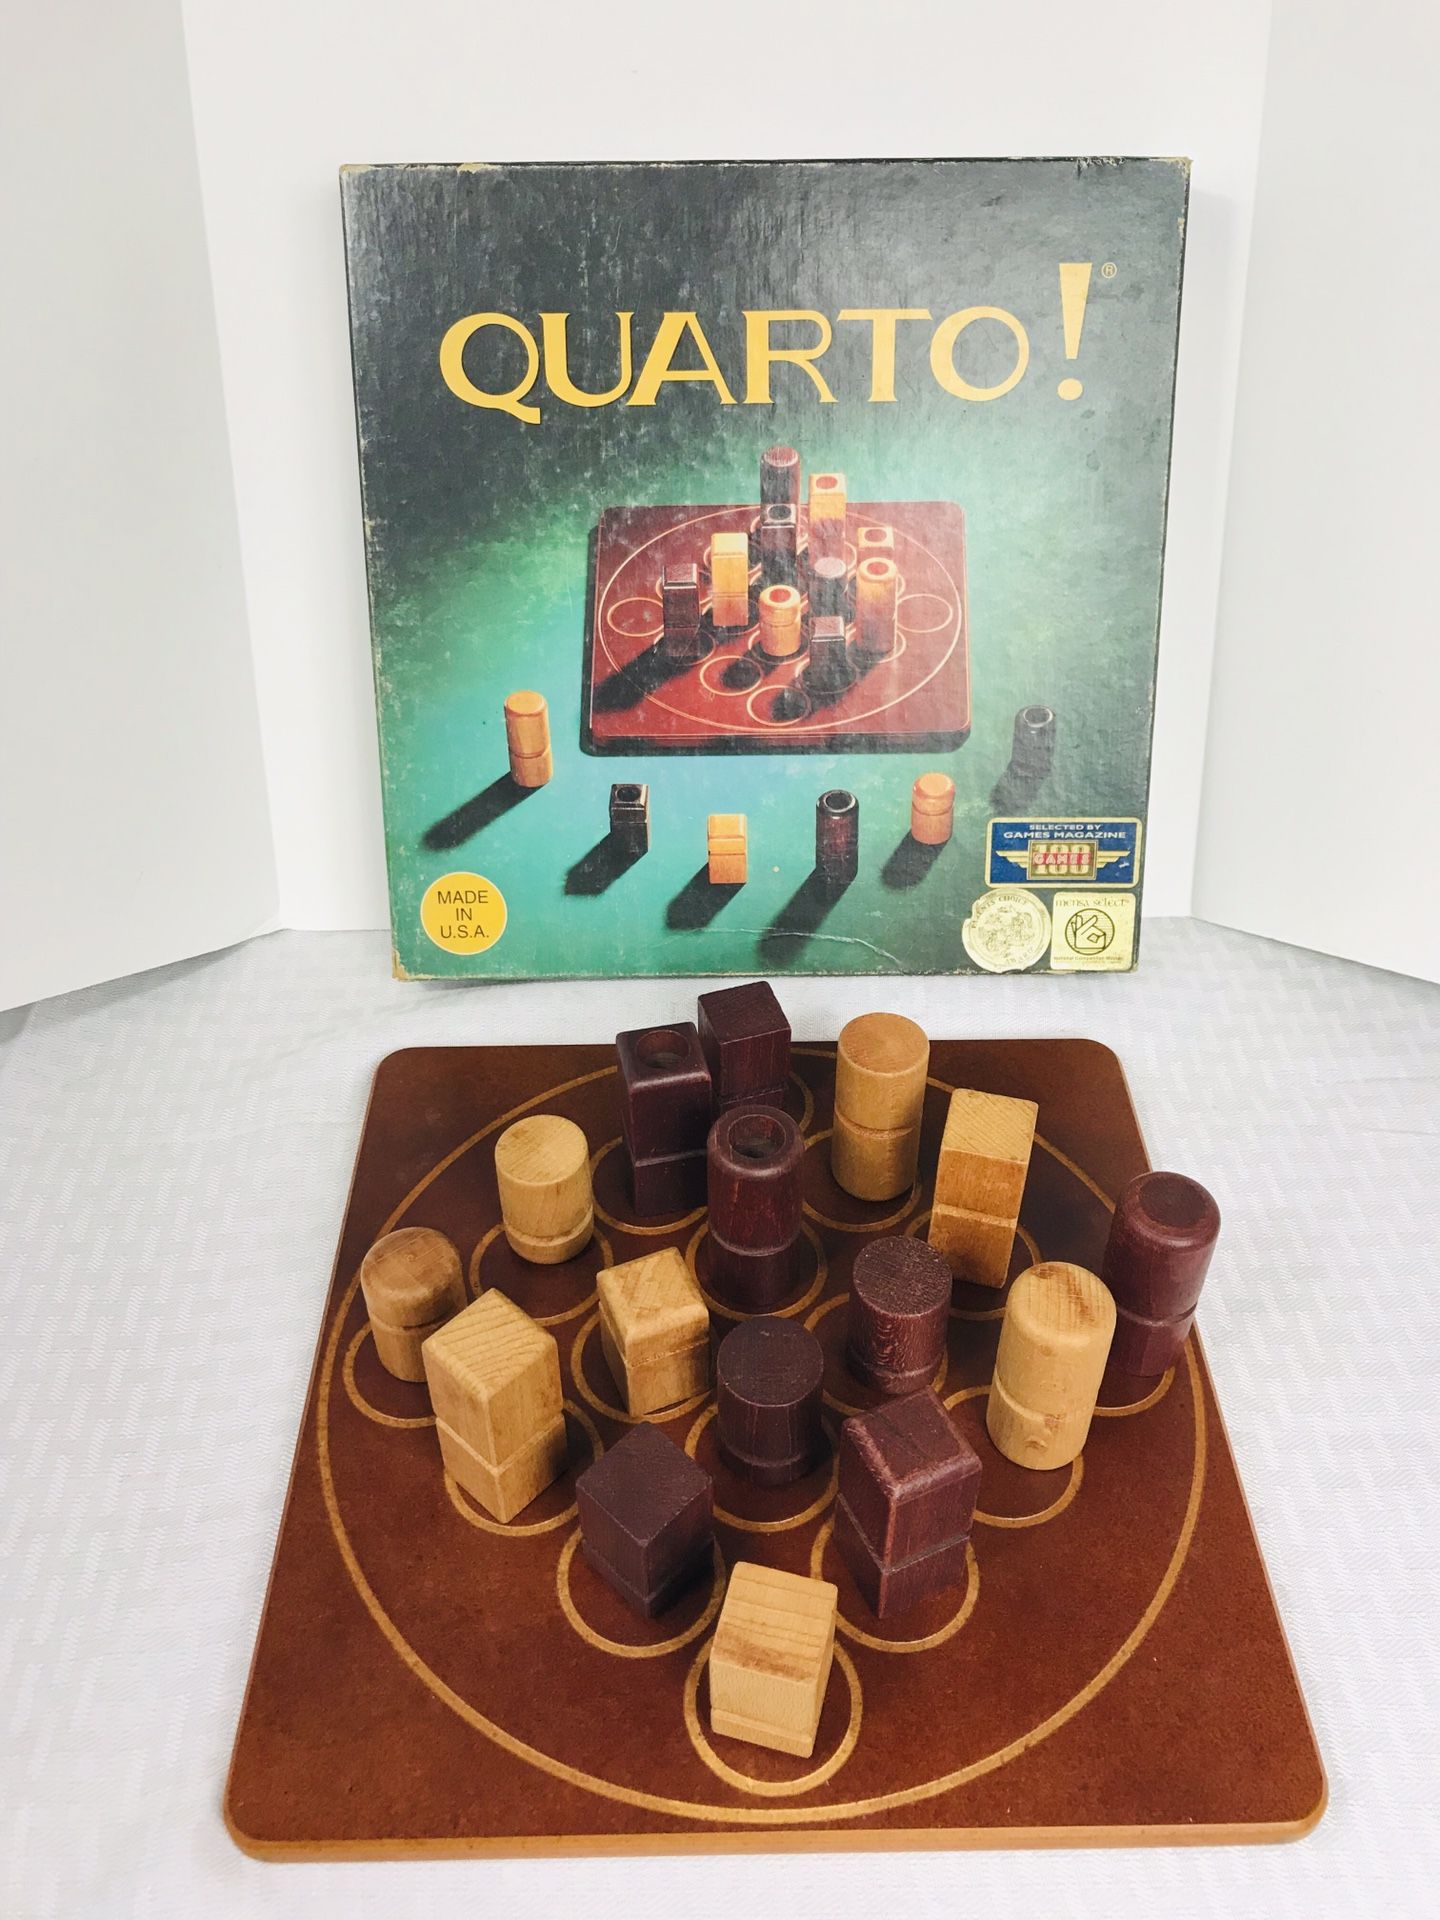 Vintage 1993 Gigamic Quarto! Strategy game